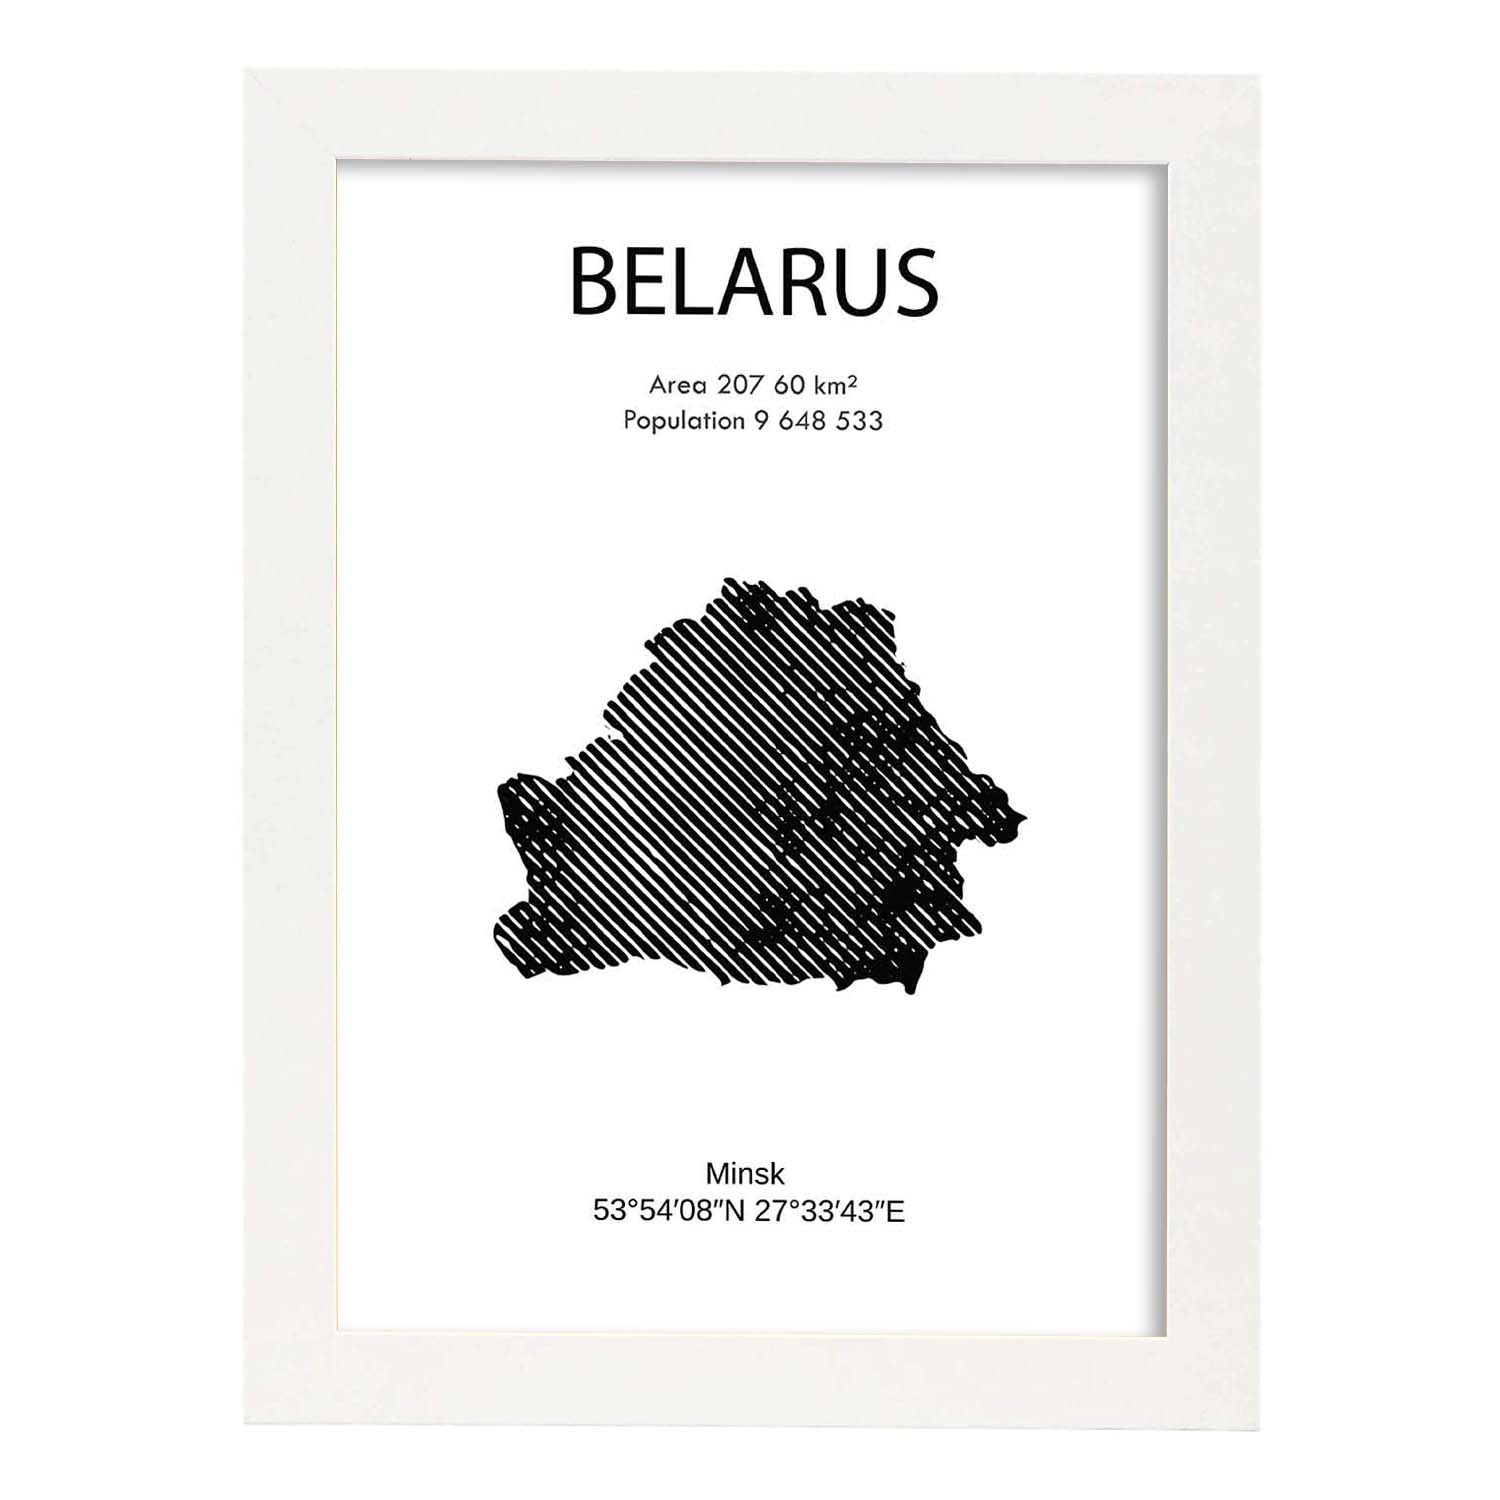 Poster de Belarus. Láminas de paises y continentes del mundo.-Artwork-Nacnic-A3-Marco Blanco-Nacnic Estudio SL